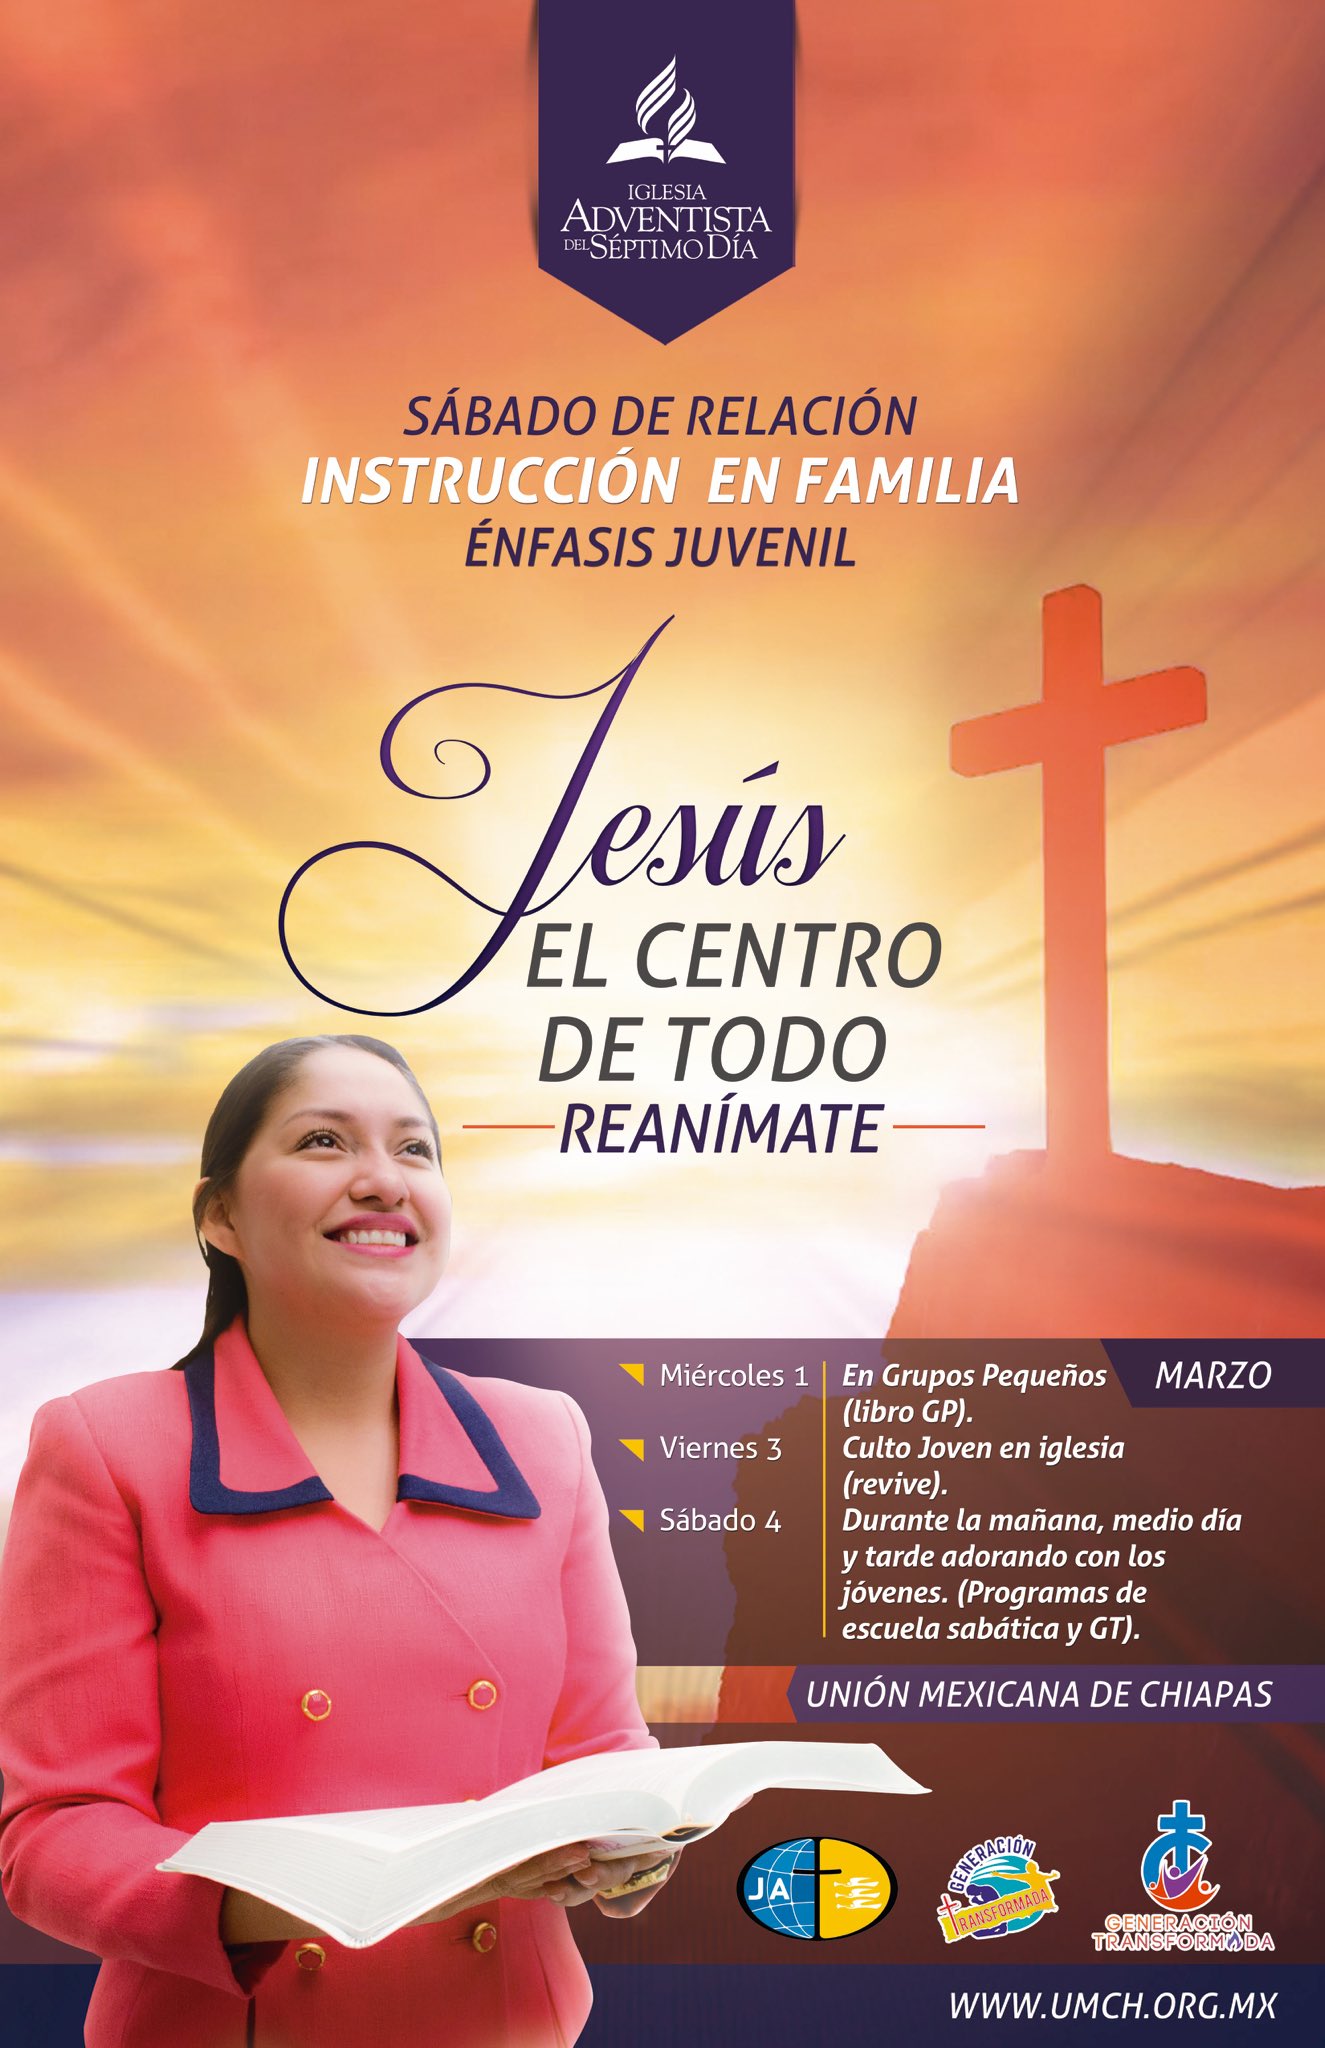 Adventistas Chiapas (@AdventistasUMCH) / Twitter